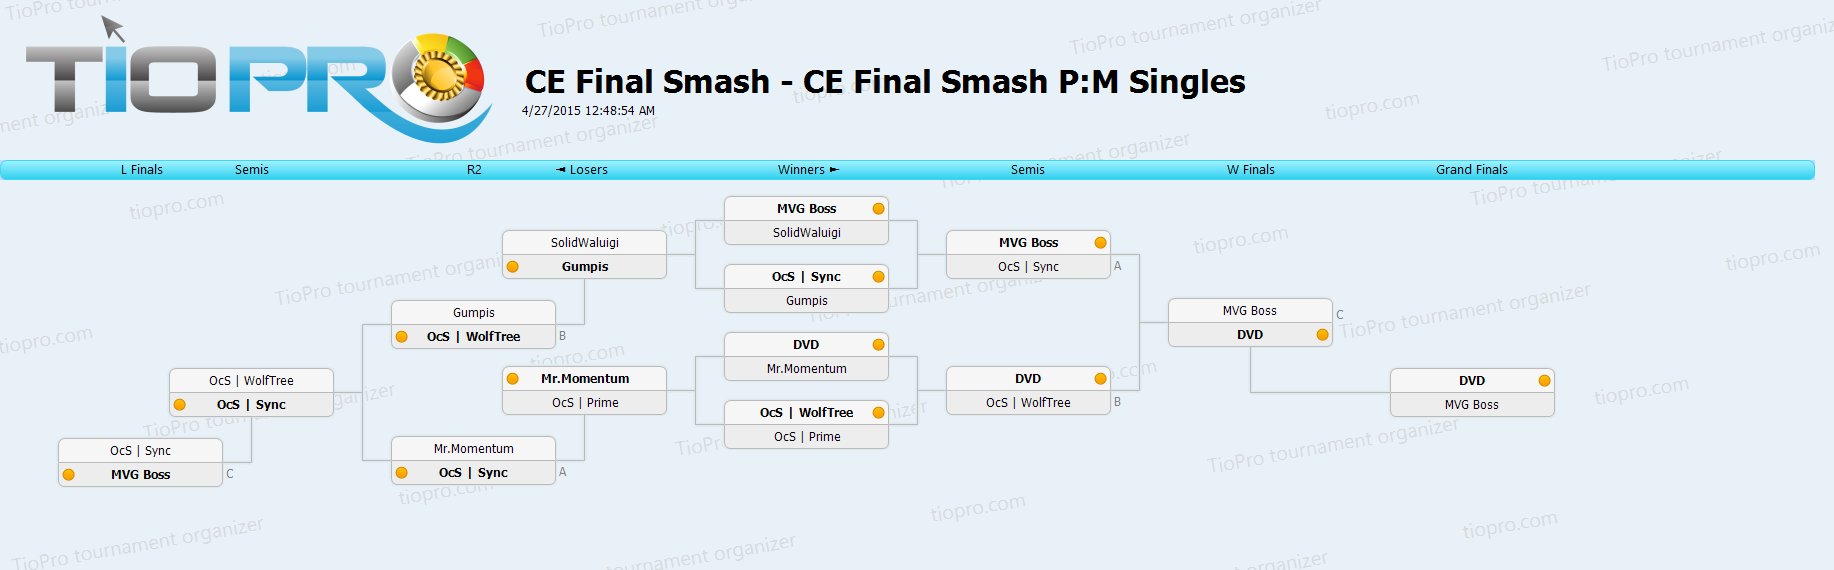 CE Final Smash P:M Singles